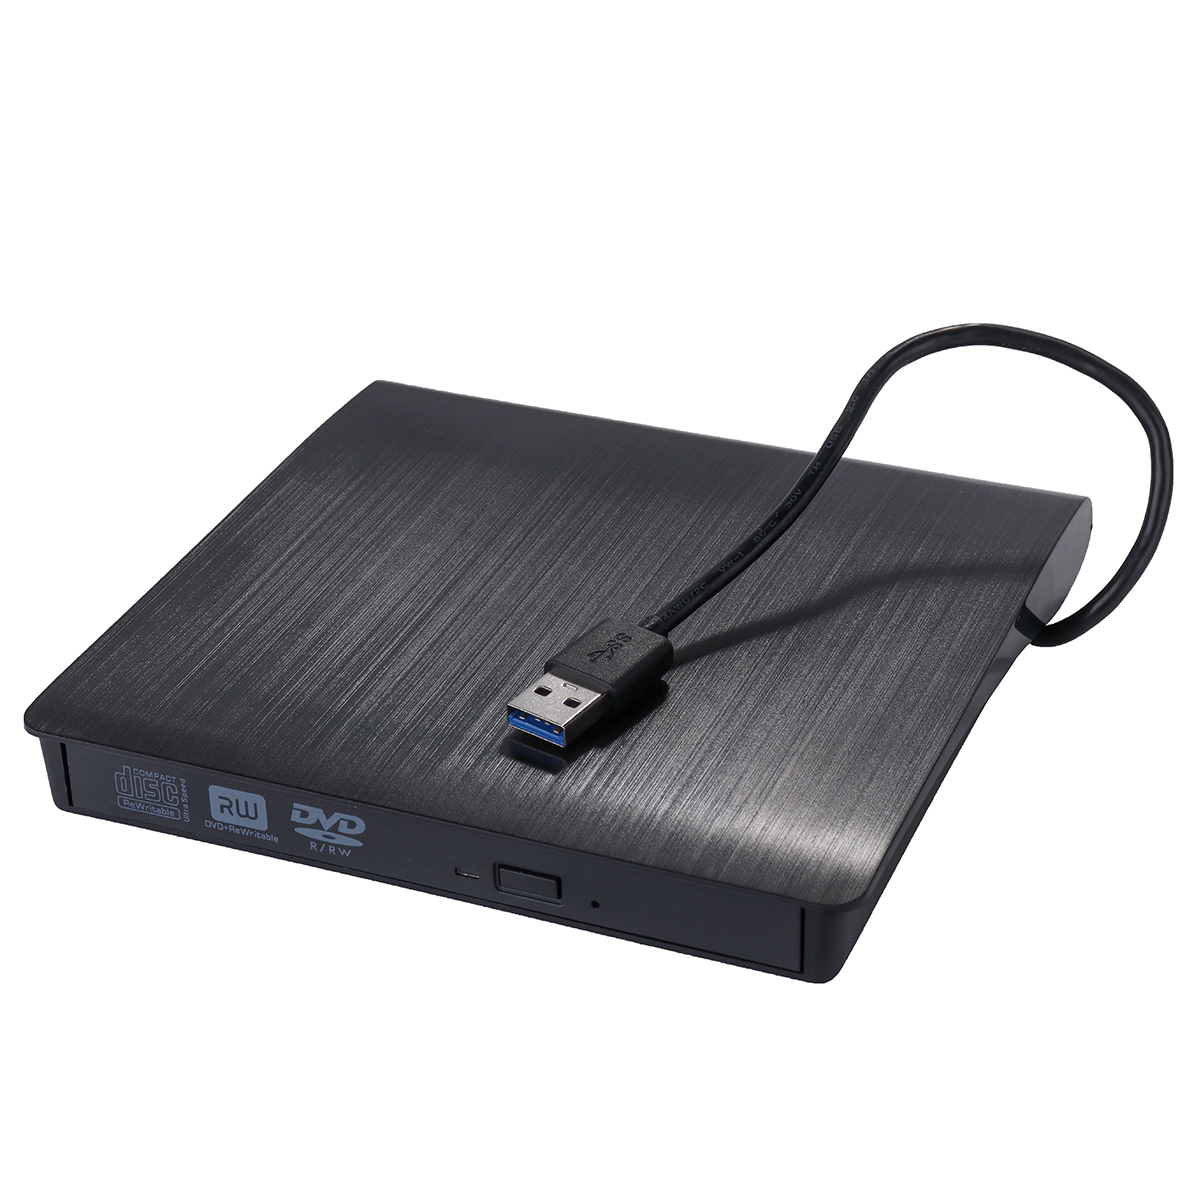 Mechzone USB3.0 External Optical Drive Slim USB CD DVD Burner DVD-RW Player Writer Support 2MB Data Transfer for PC Laptop Computer